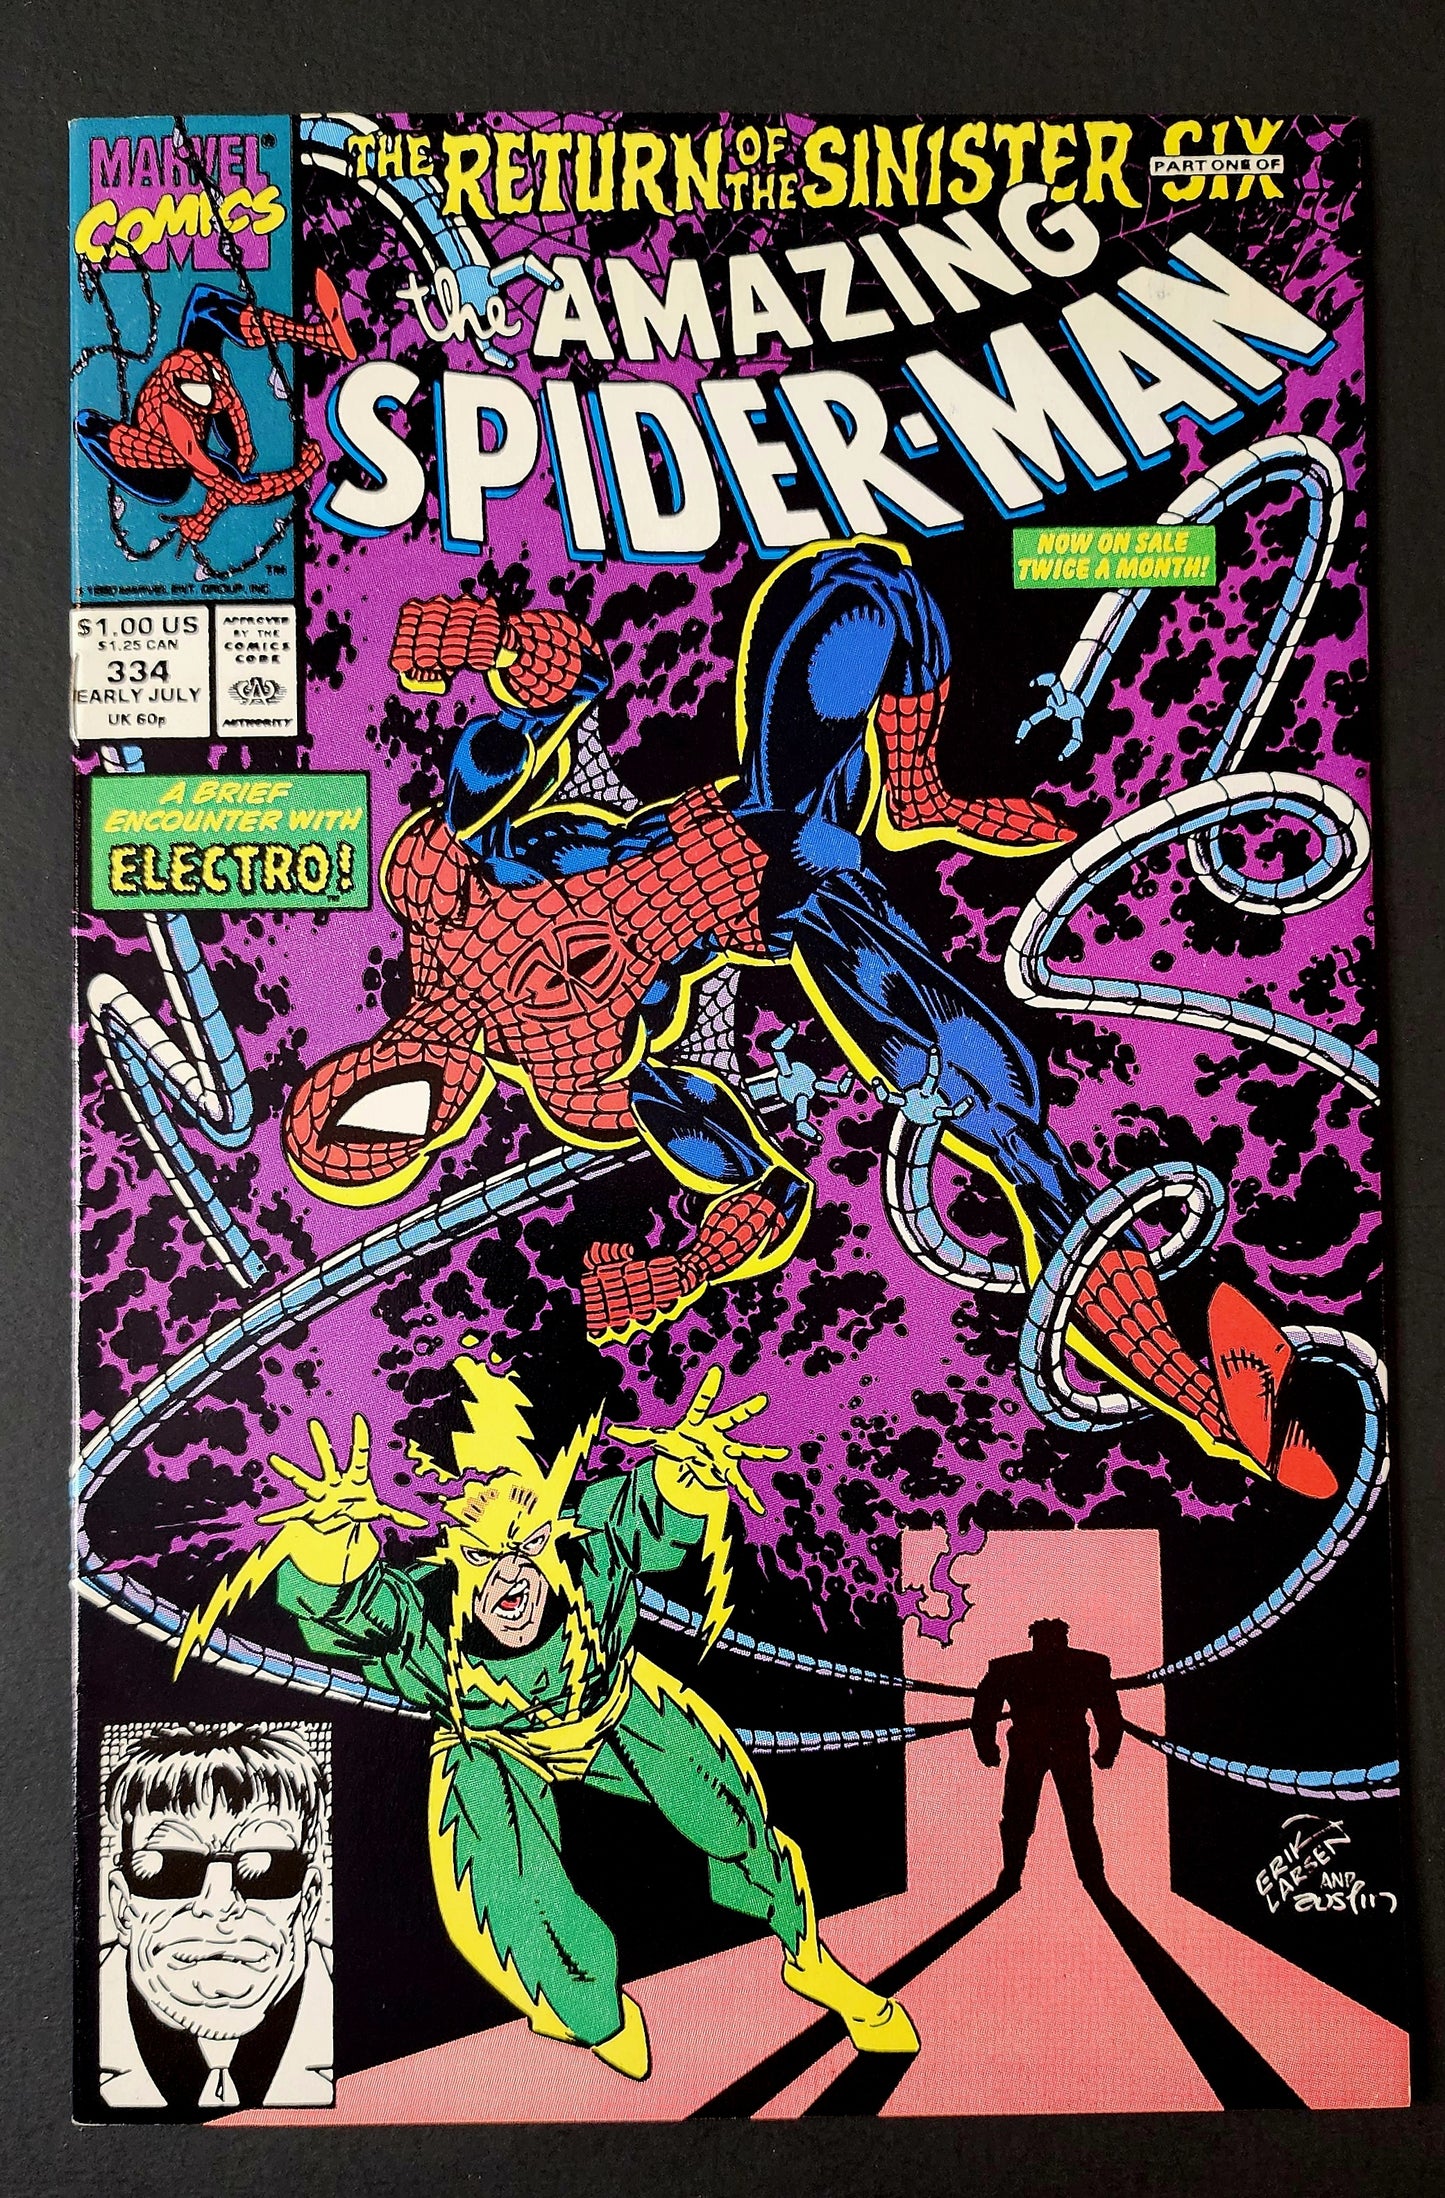 Amazing Spider-Man #334 (VF)